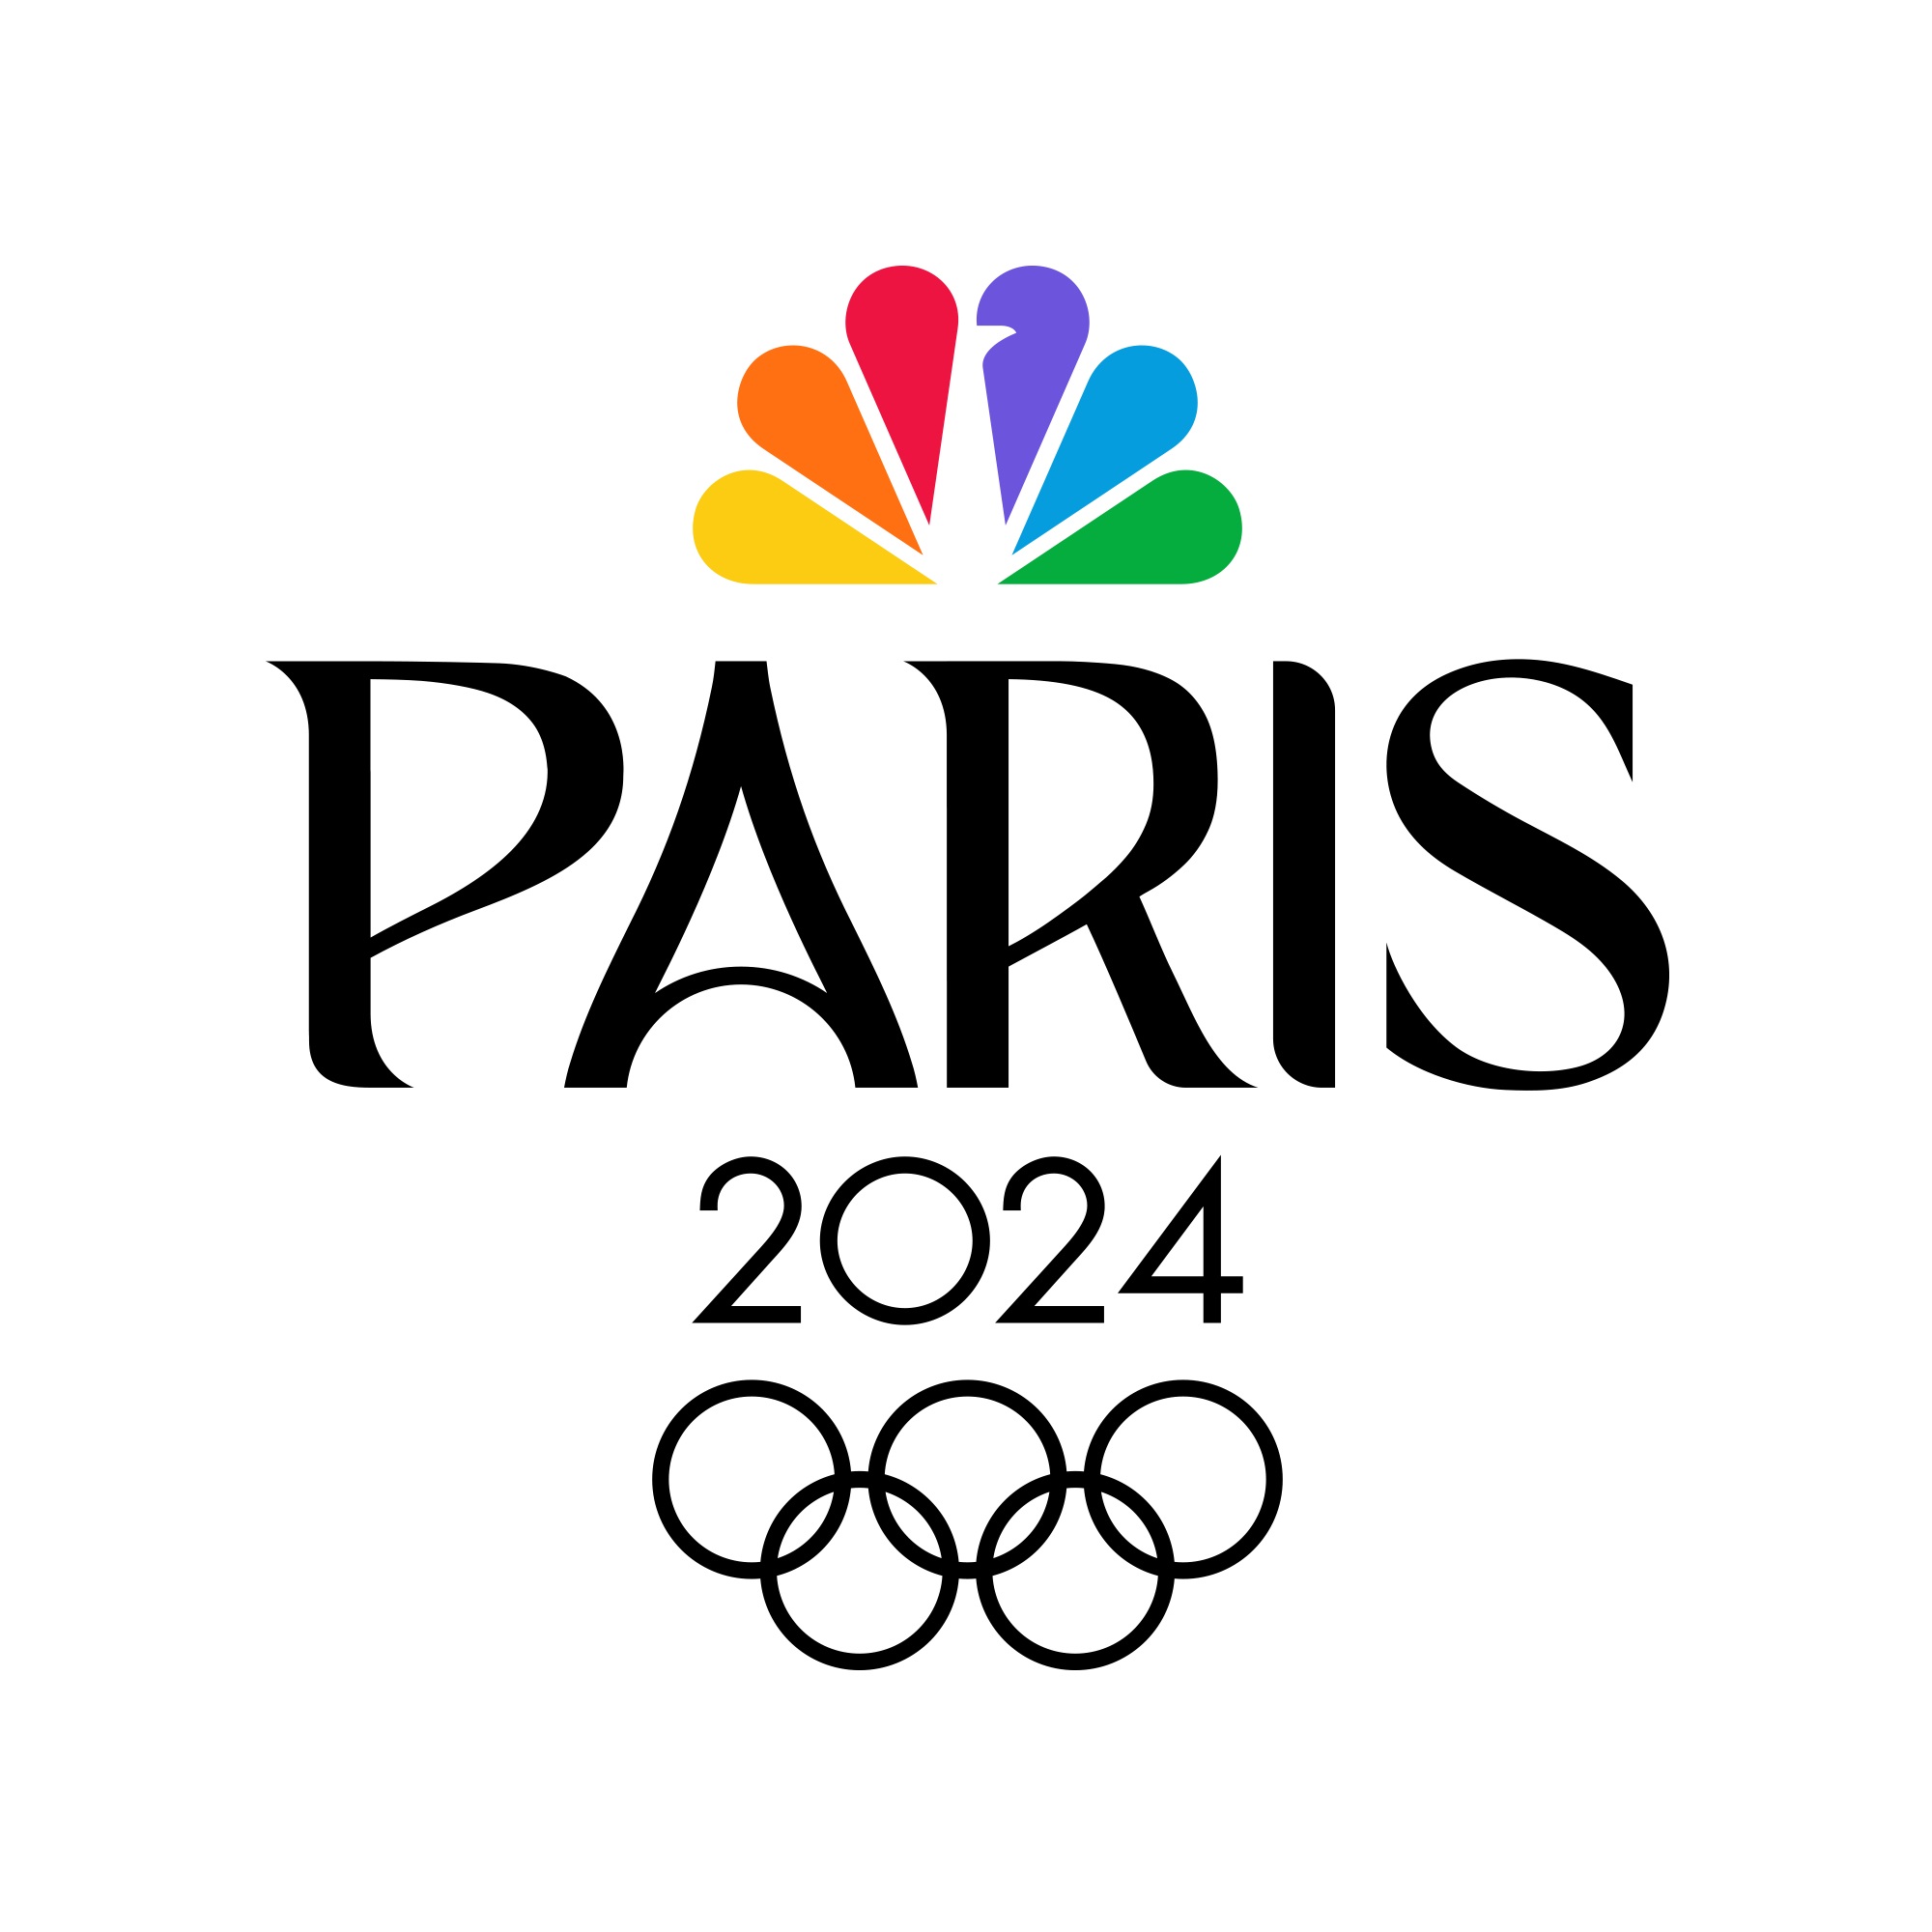 Olympics: NBC Sending Over 150 Commentators to Paris 2024